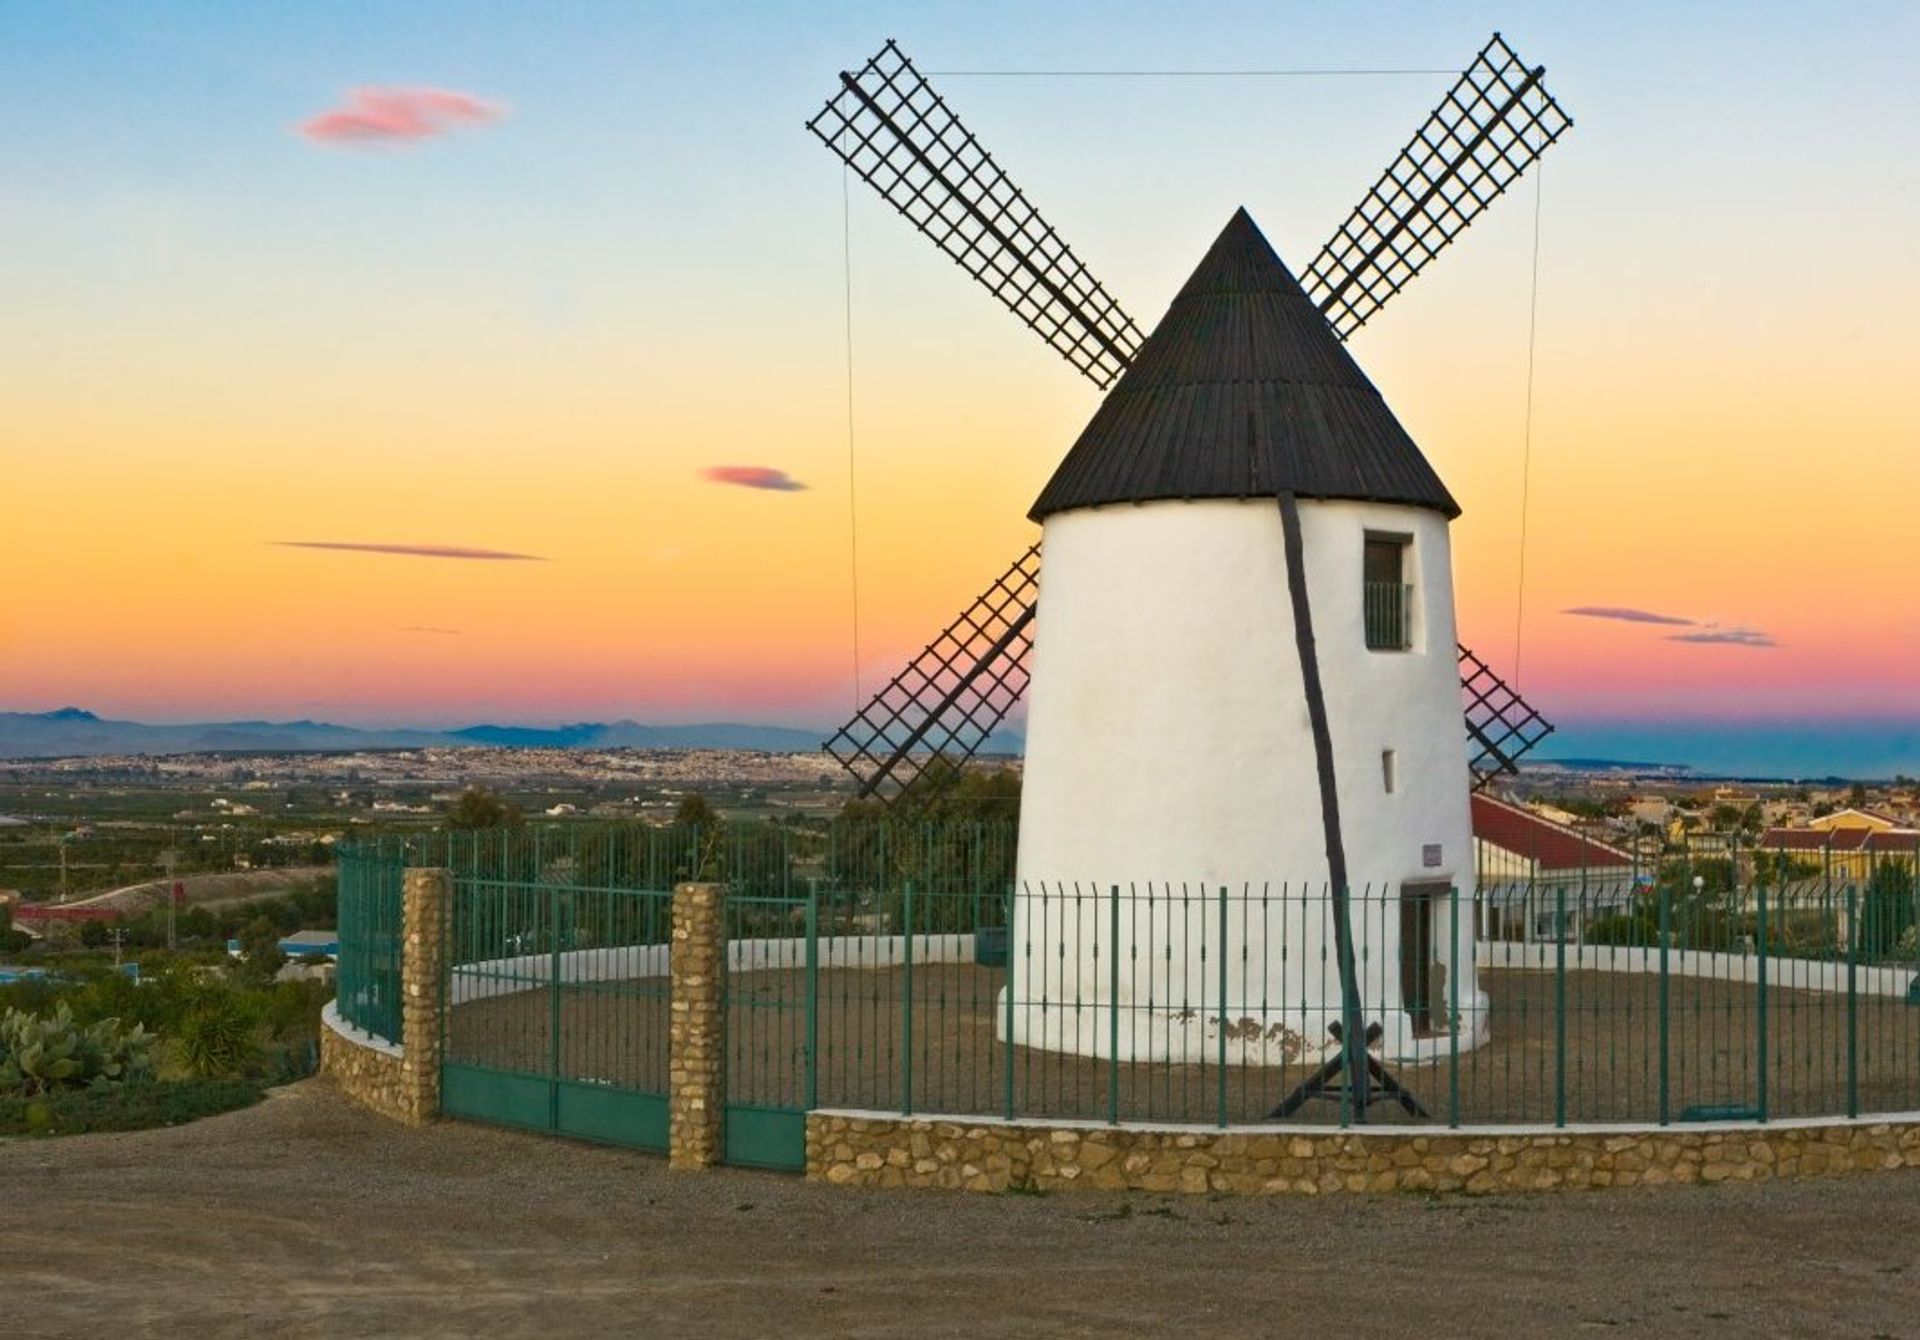 Molino de Viento Windmill is the village's landmark, offering panoramic views of the surrounding countryside